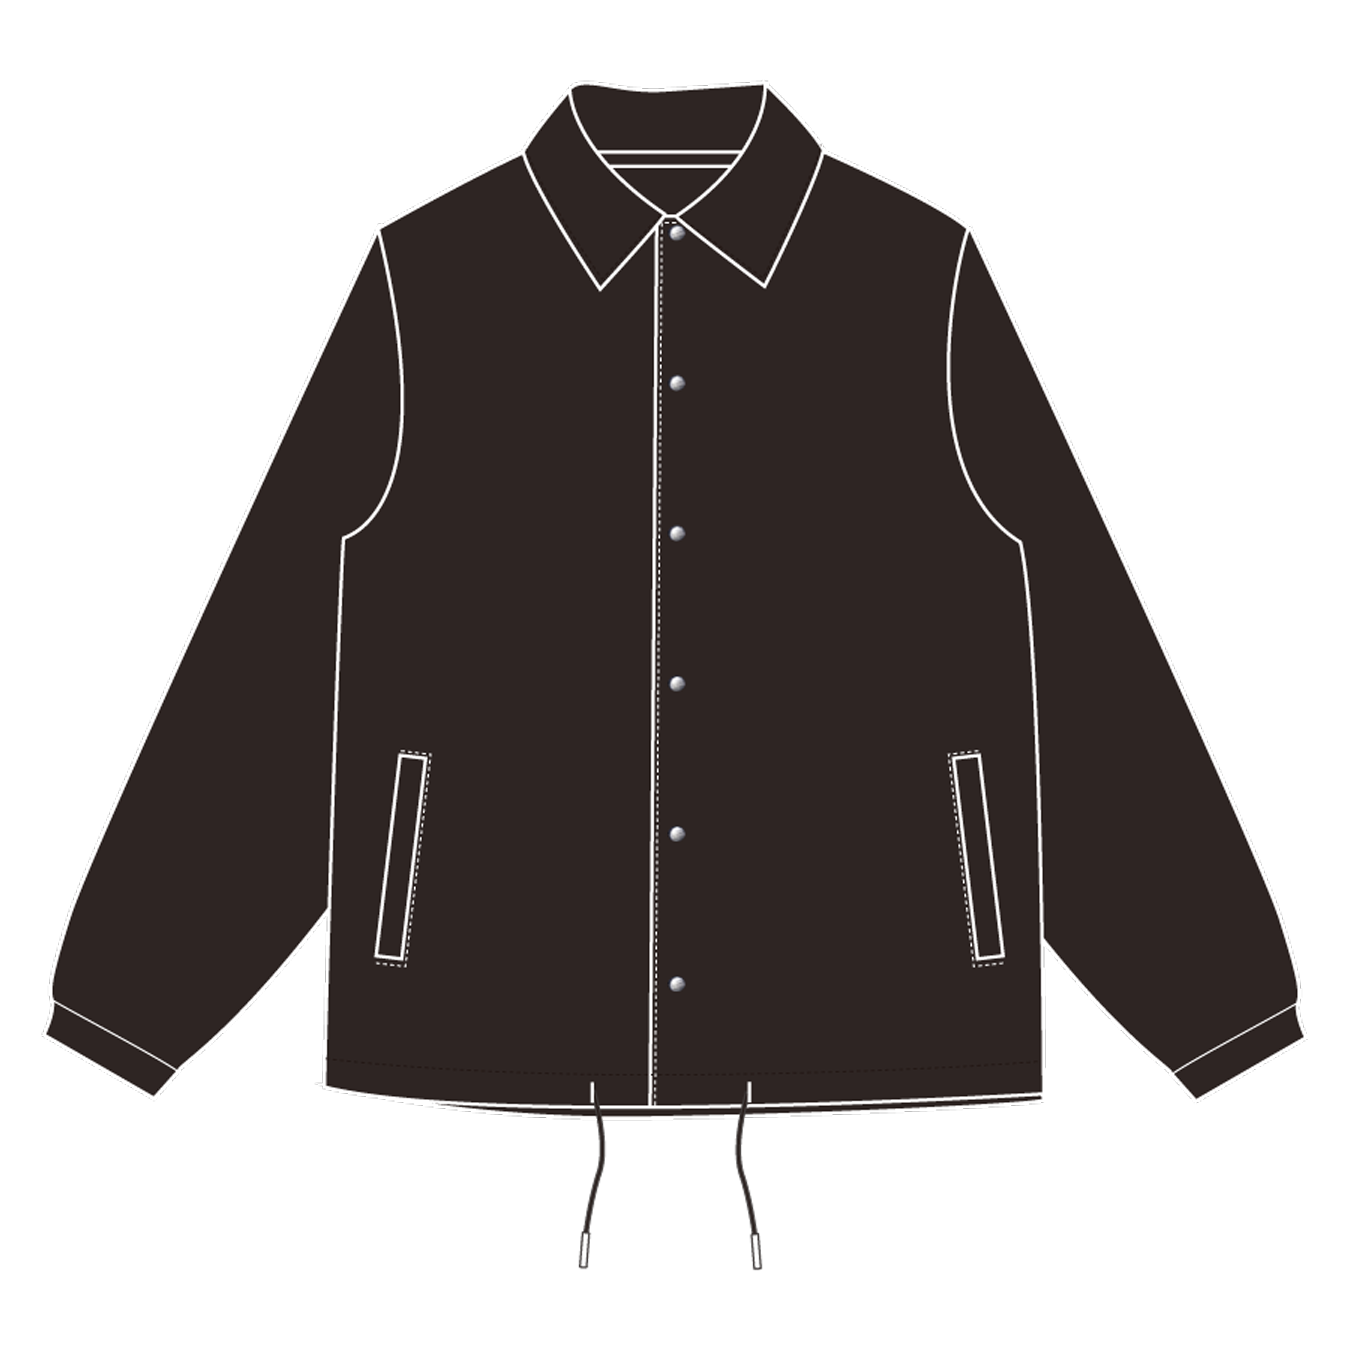 Design a communityexclusive jacket